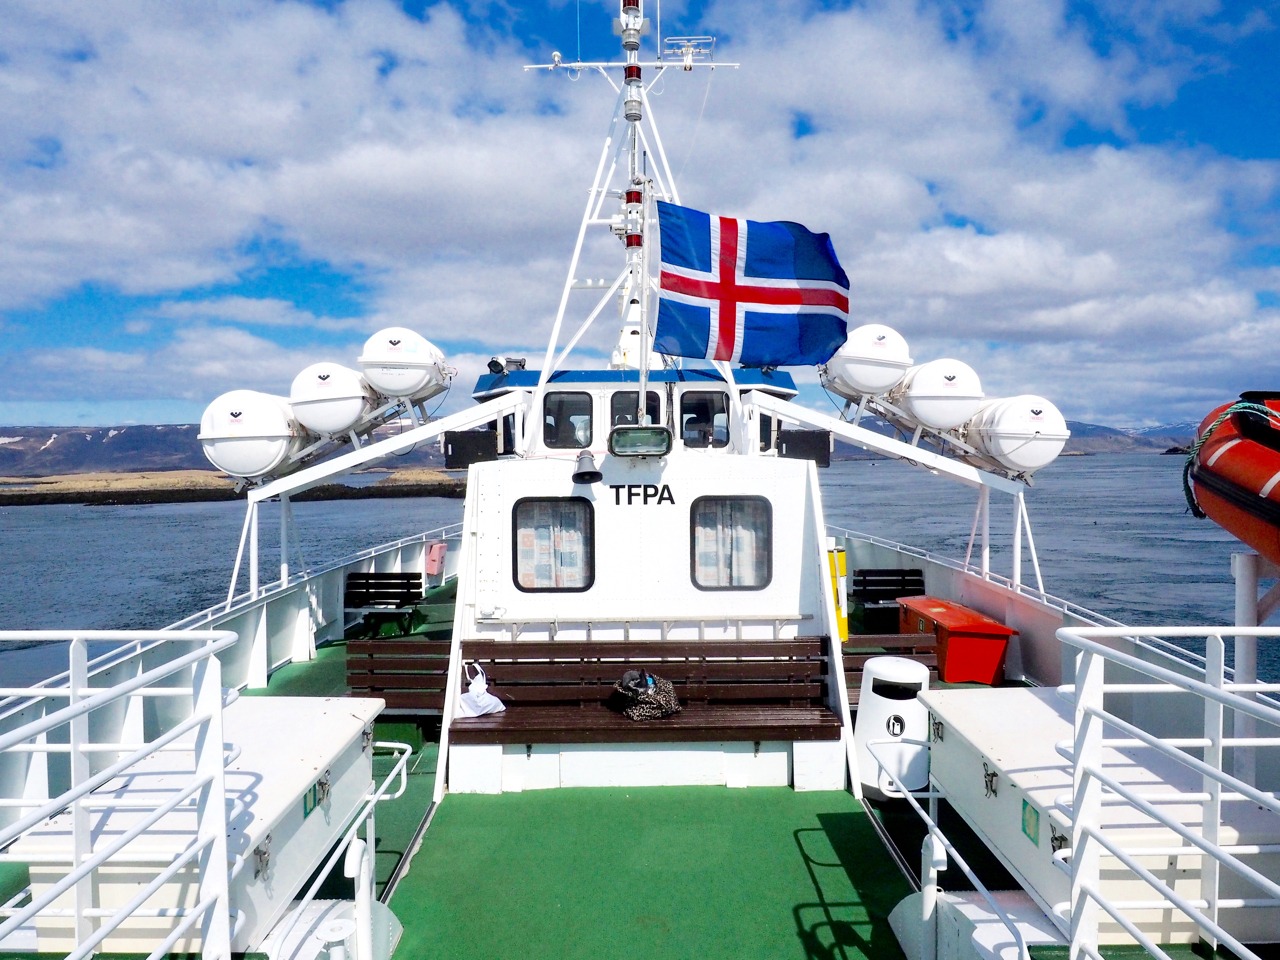 Snaefellsness Peninsula, Stykkishólmur boat trip - The Best Day Trips from Reykjavik